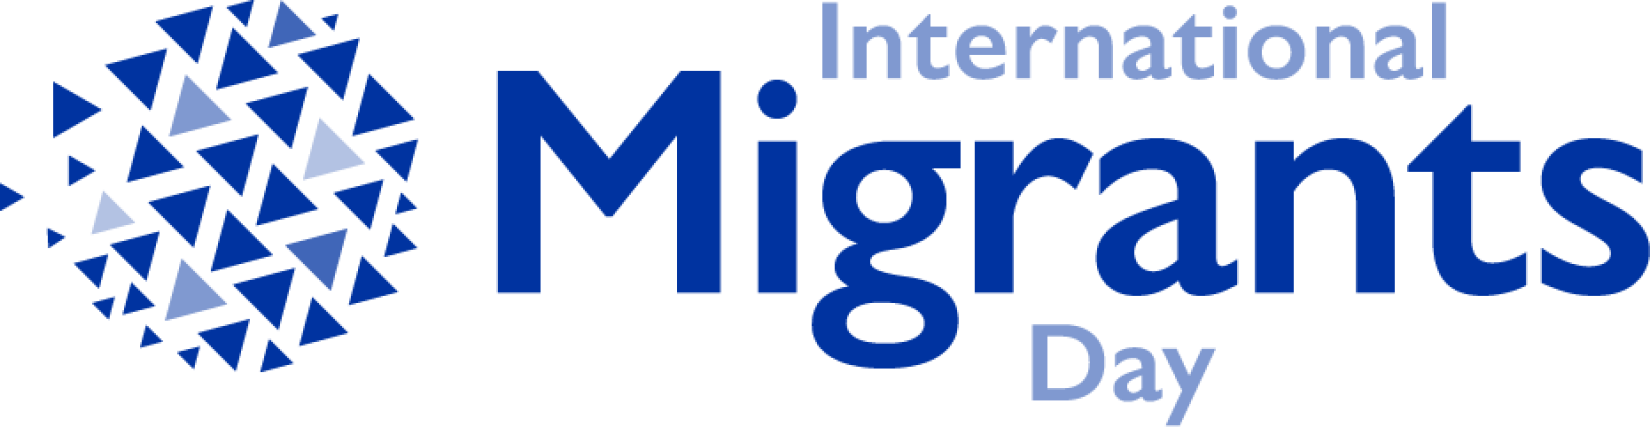 International Migrants Day logo